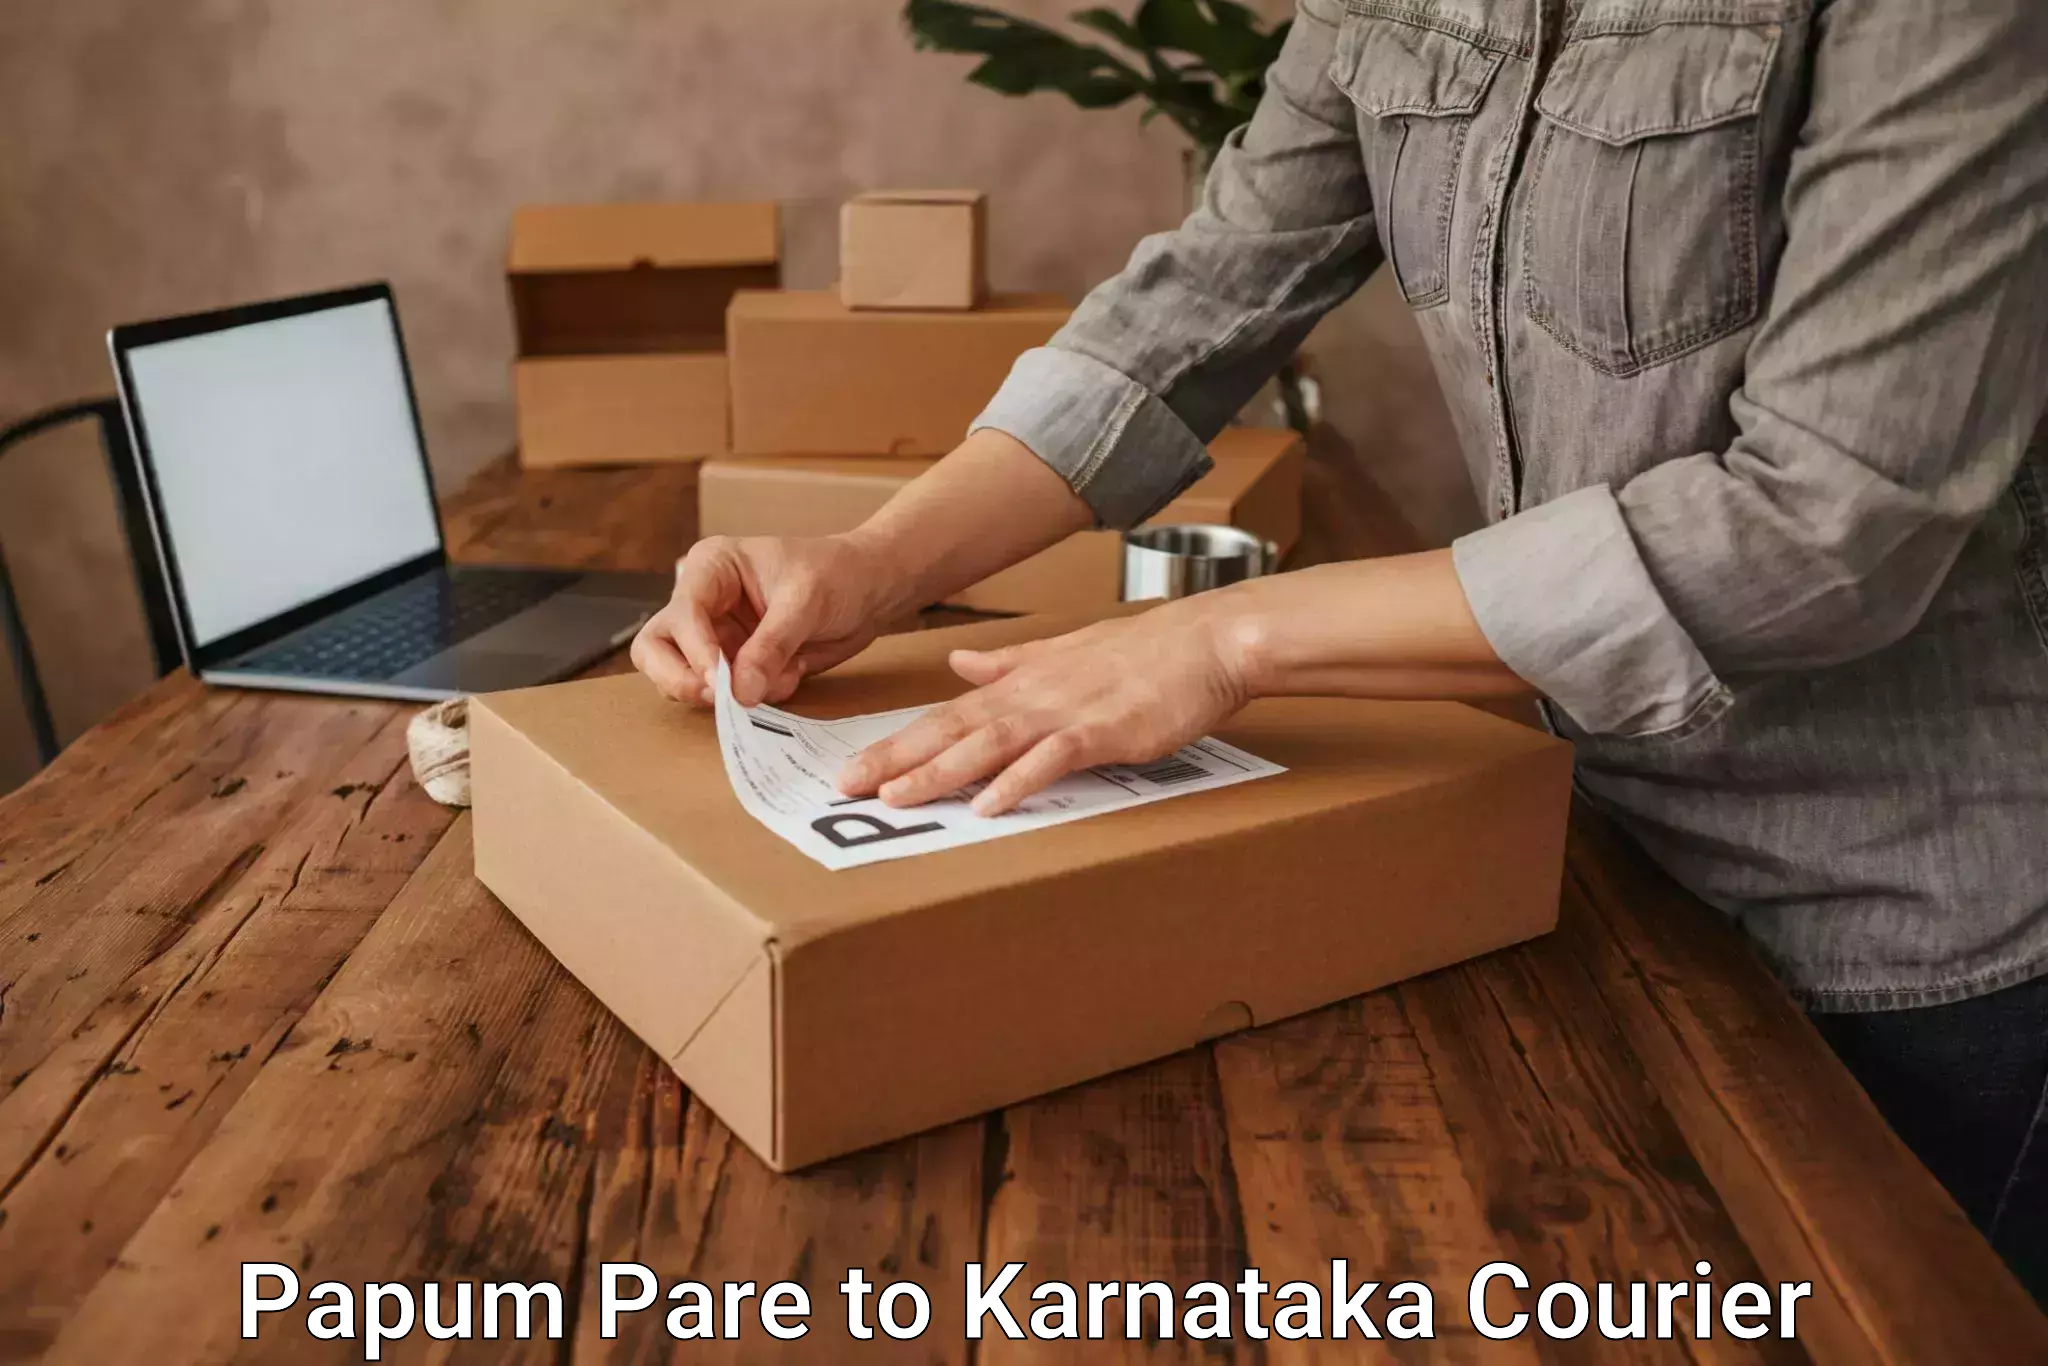 Advanced tracking systems Papum Pare to Karnataka